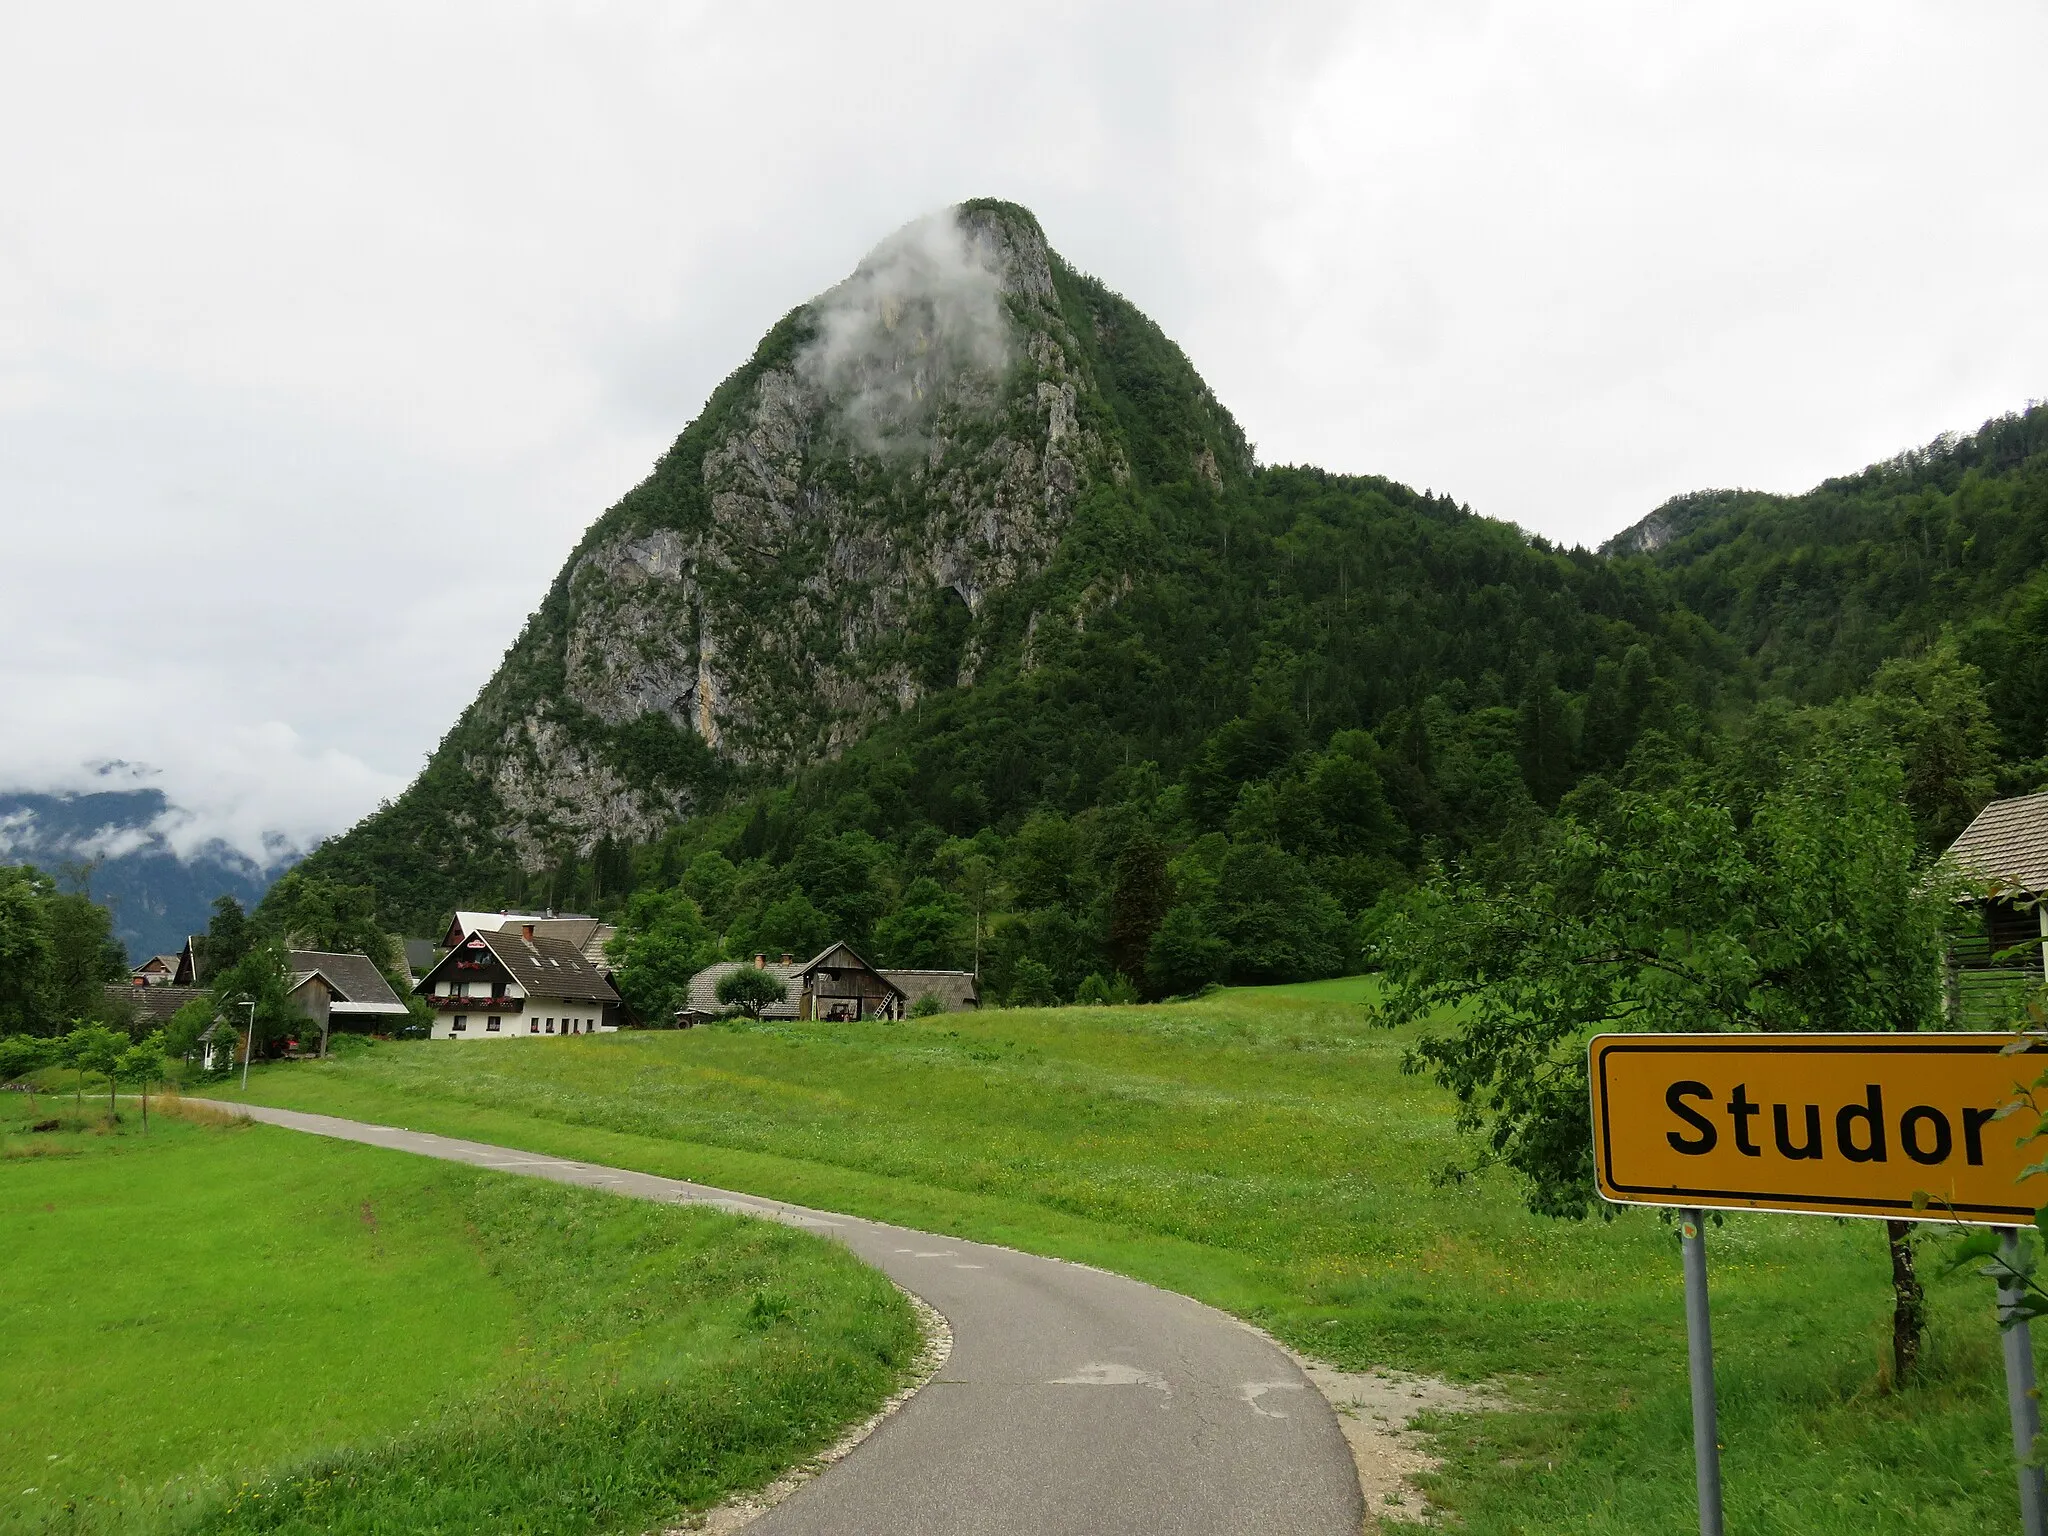 Photo showing: Studor v Bohinju, Municipality of Bohinj, Slovenia